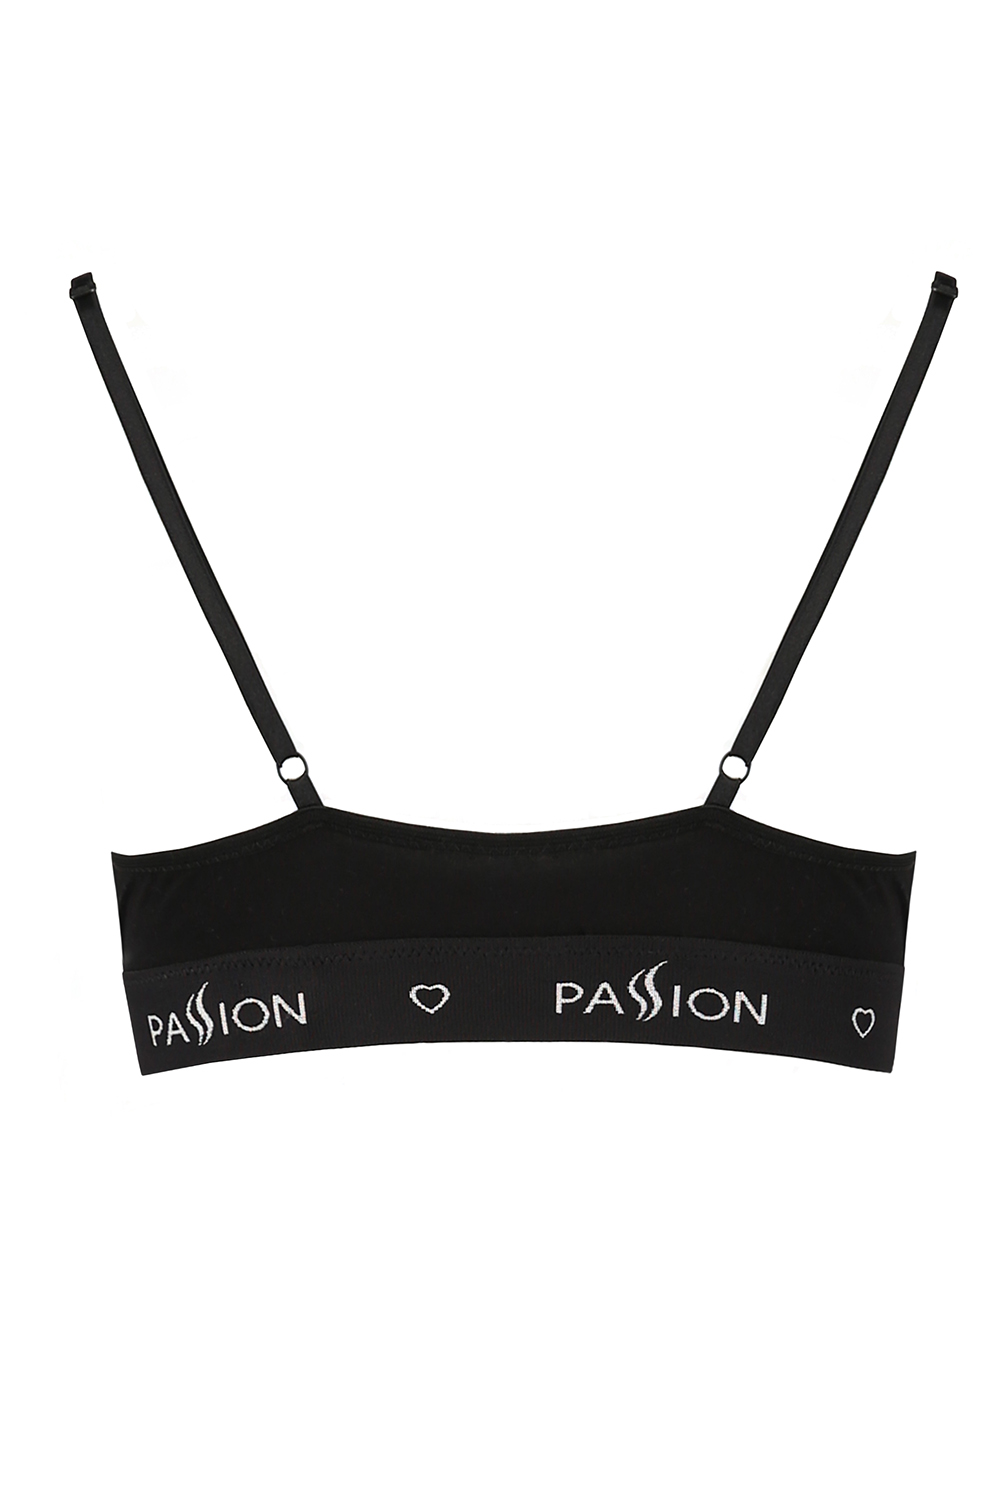 Passion womens soft lace sports bra PS001, Black | Black